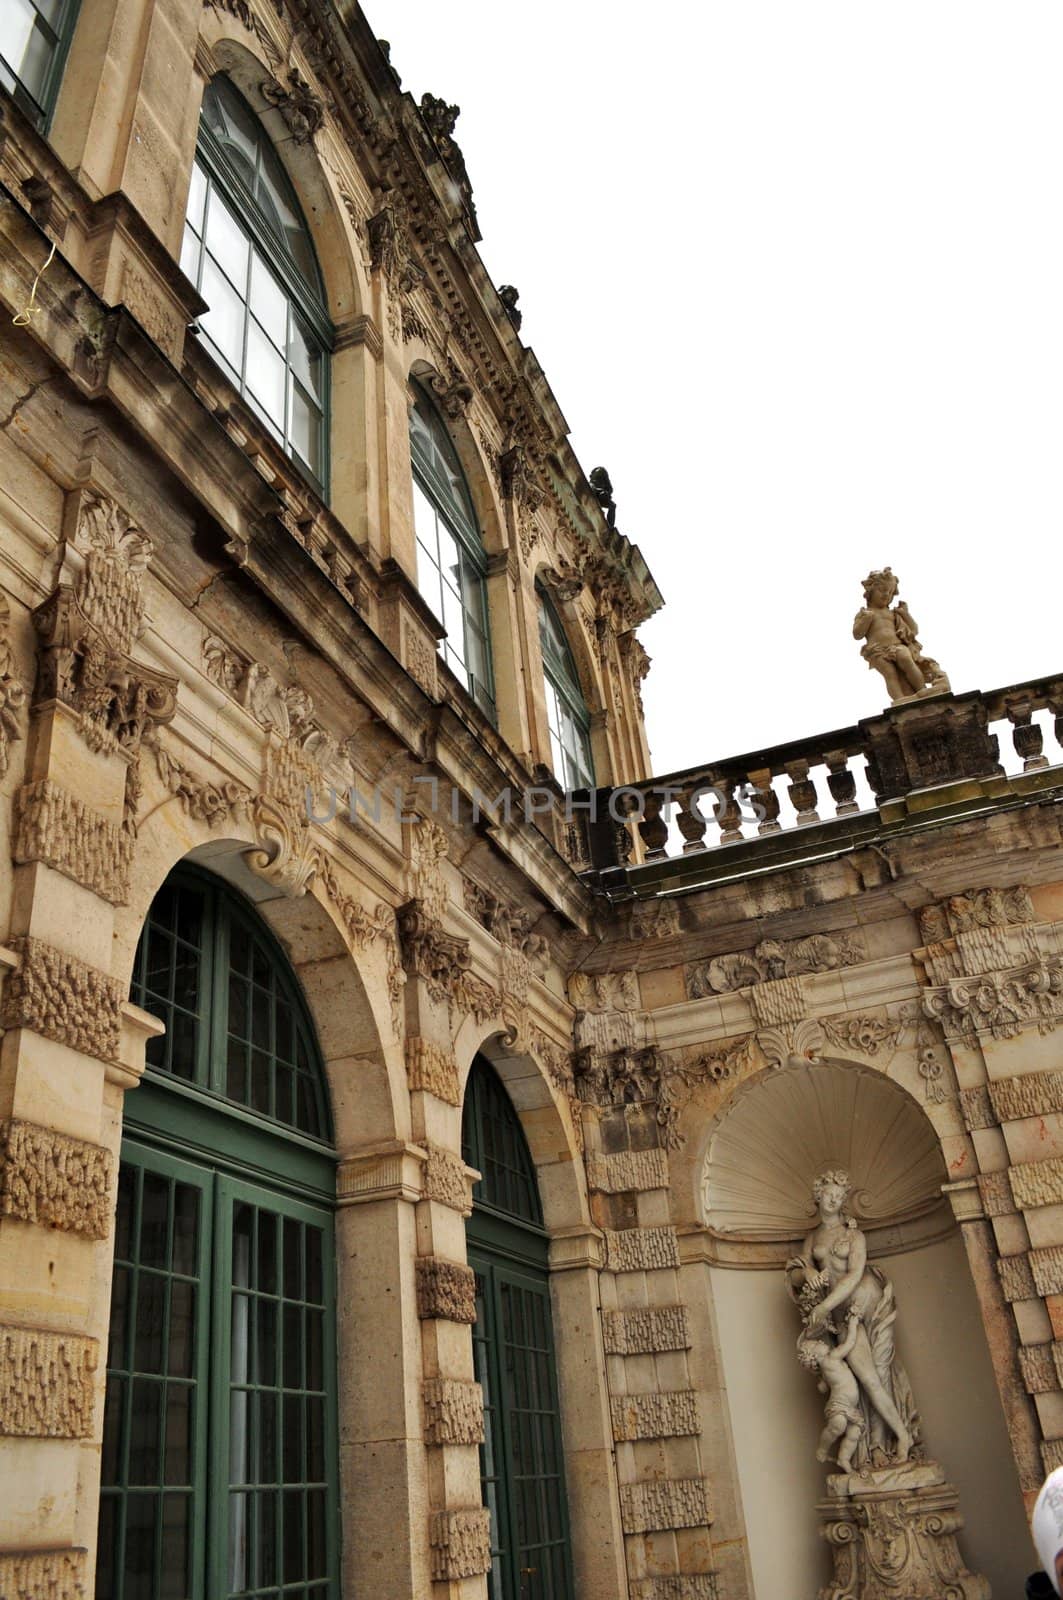 Zwinger Palace in Dresden is major German landmark